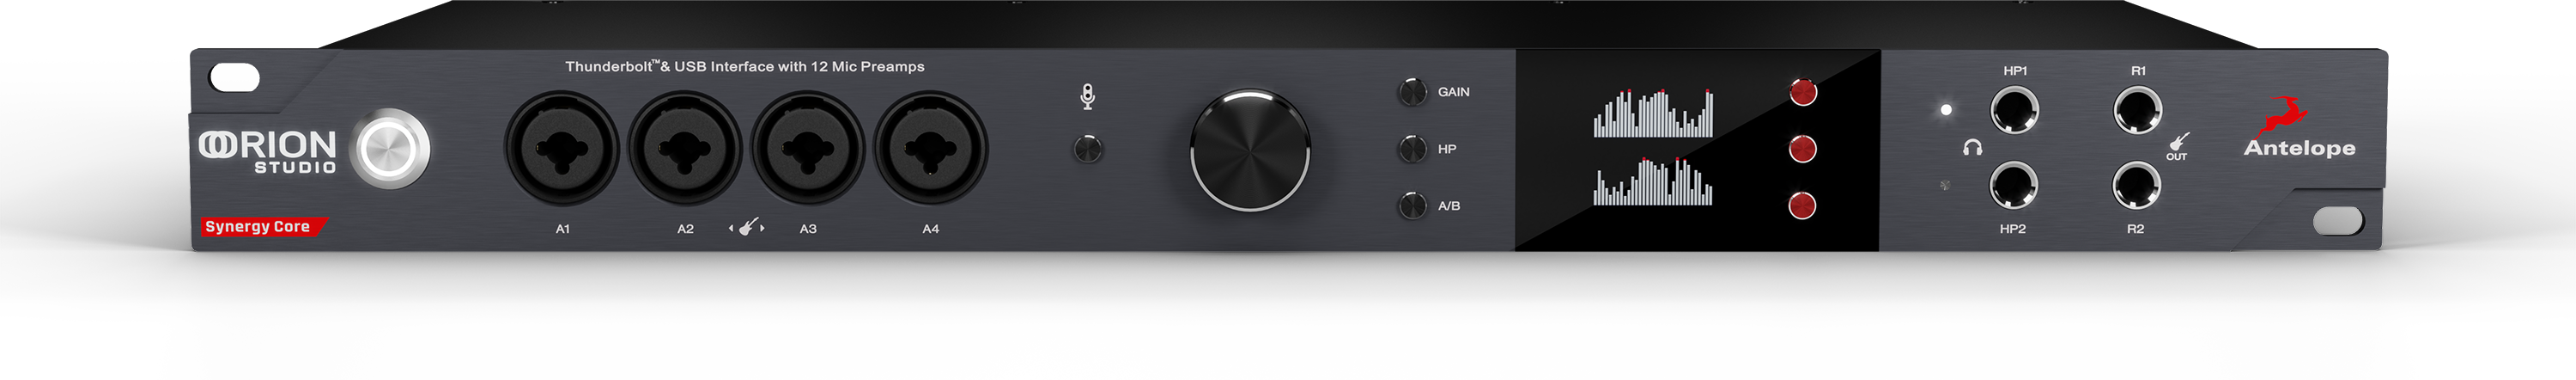 Antelope Audio Orion Studio Synergy Core - Interface de audio thunderbolt - Main picture